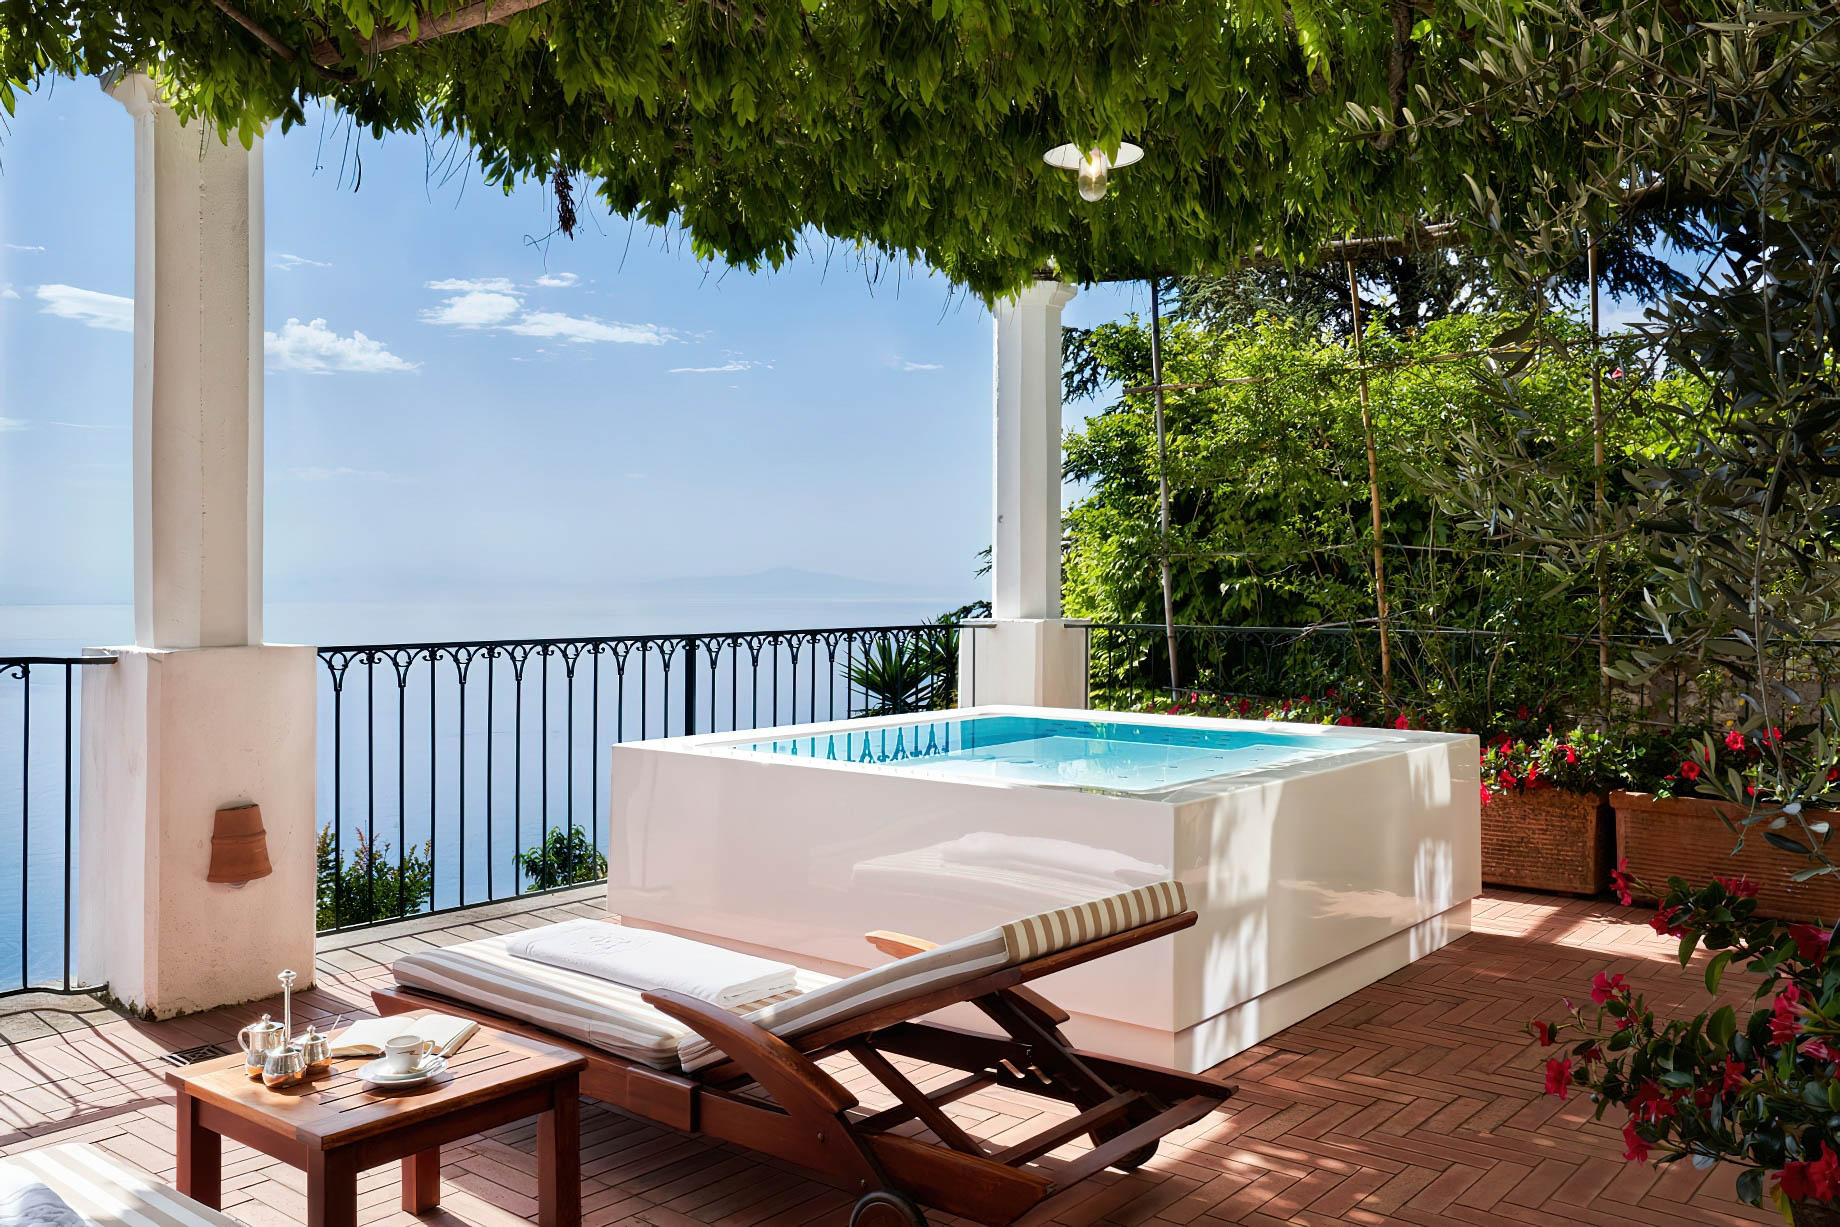 Palazzo Avino Hotel – Amalfi Coast, Ravello, Italy – Belvedere Suite with Sea View and Terrace